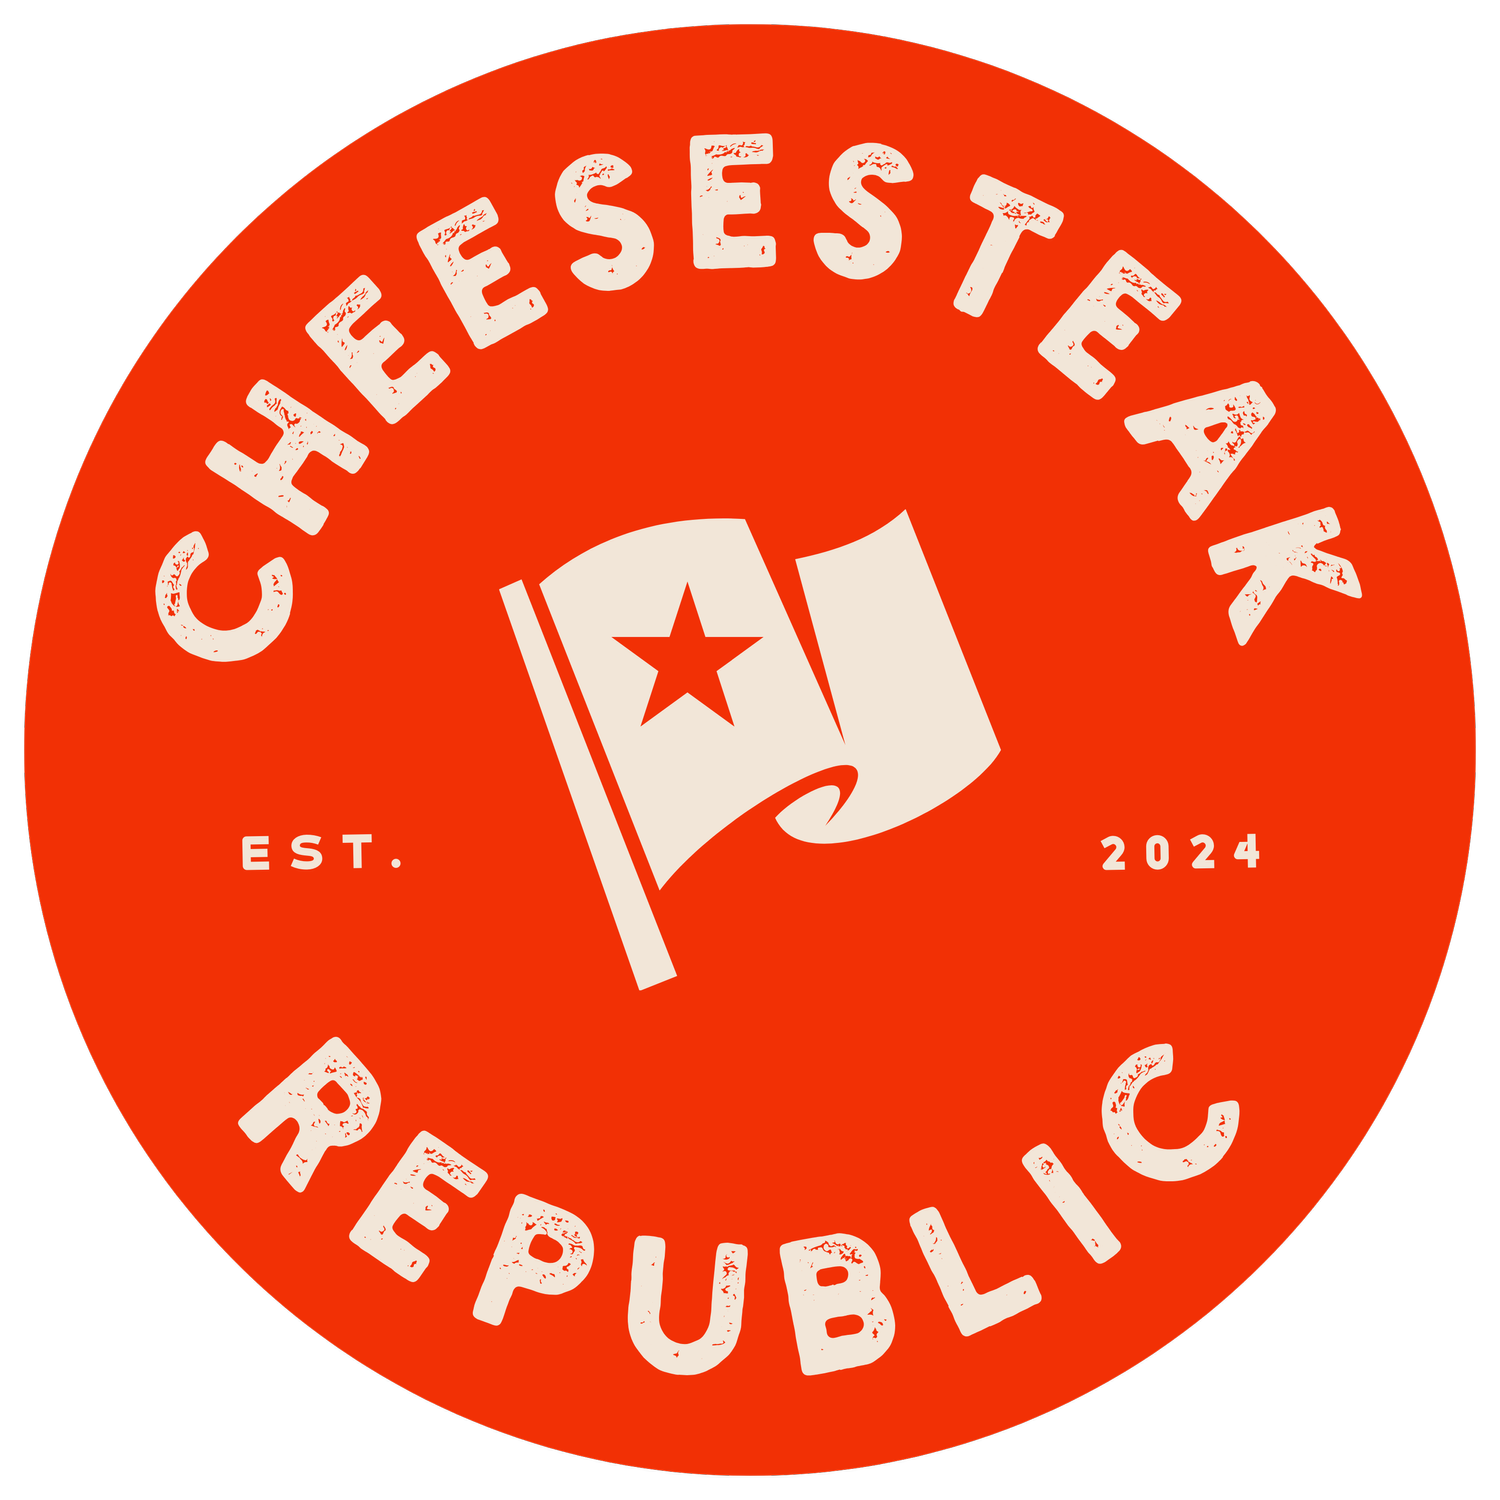 Cheesesteak Republic